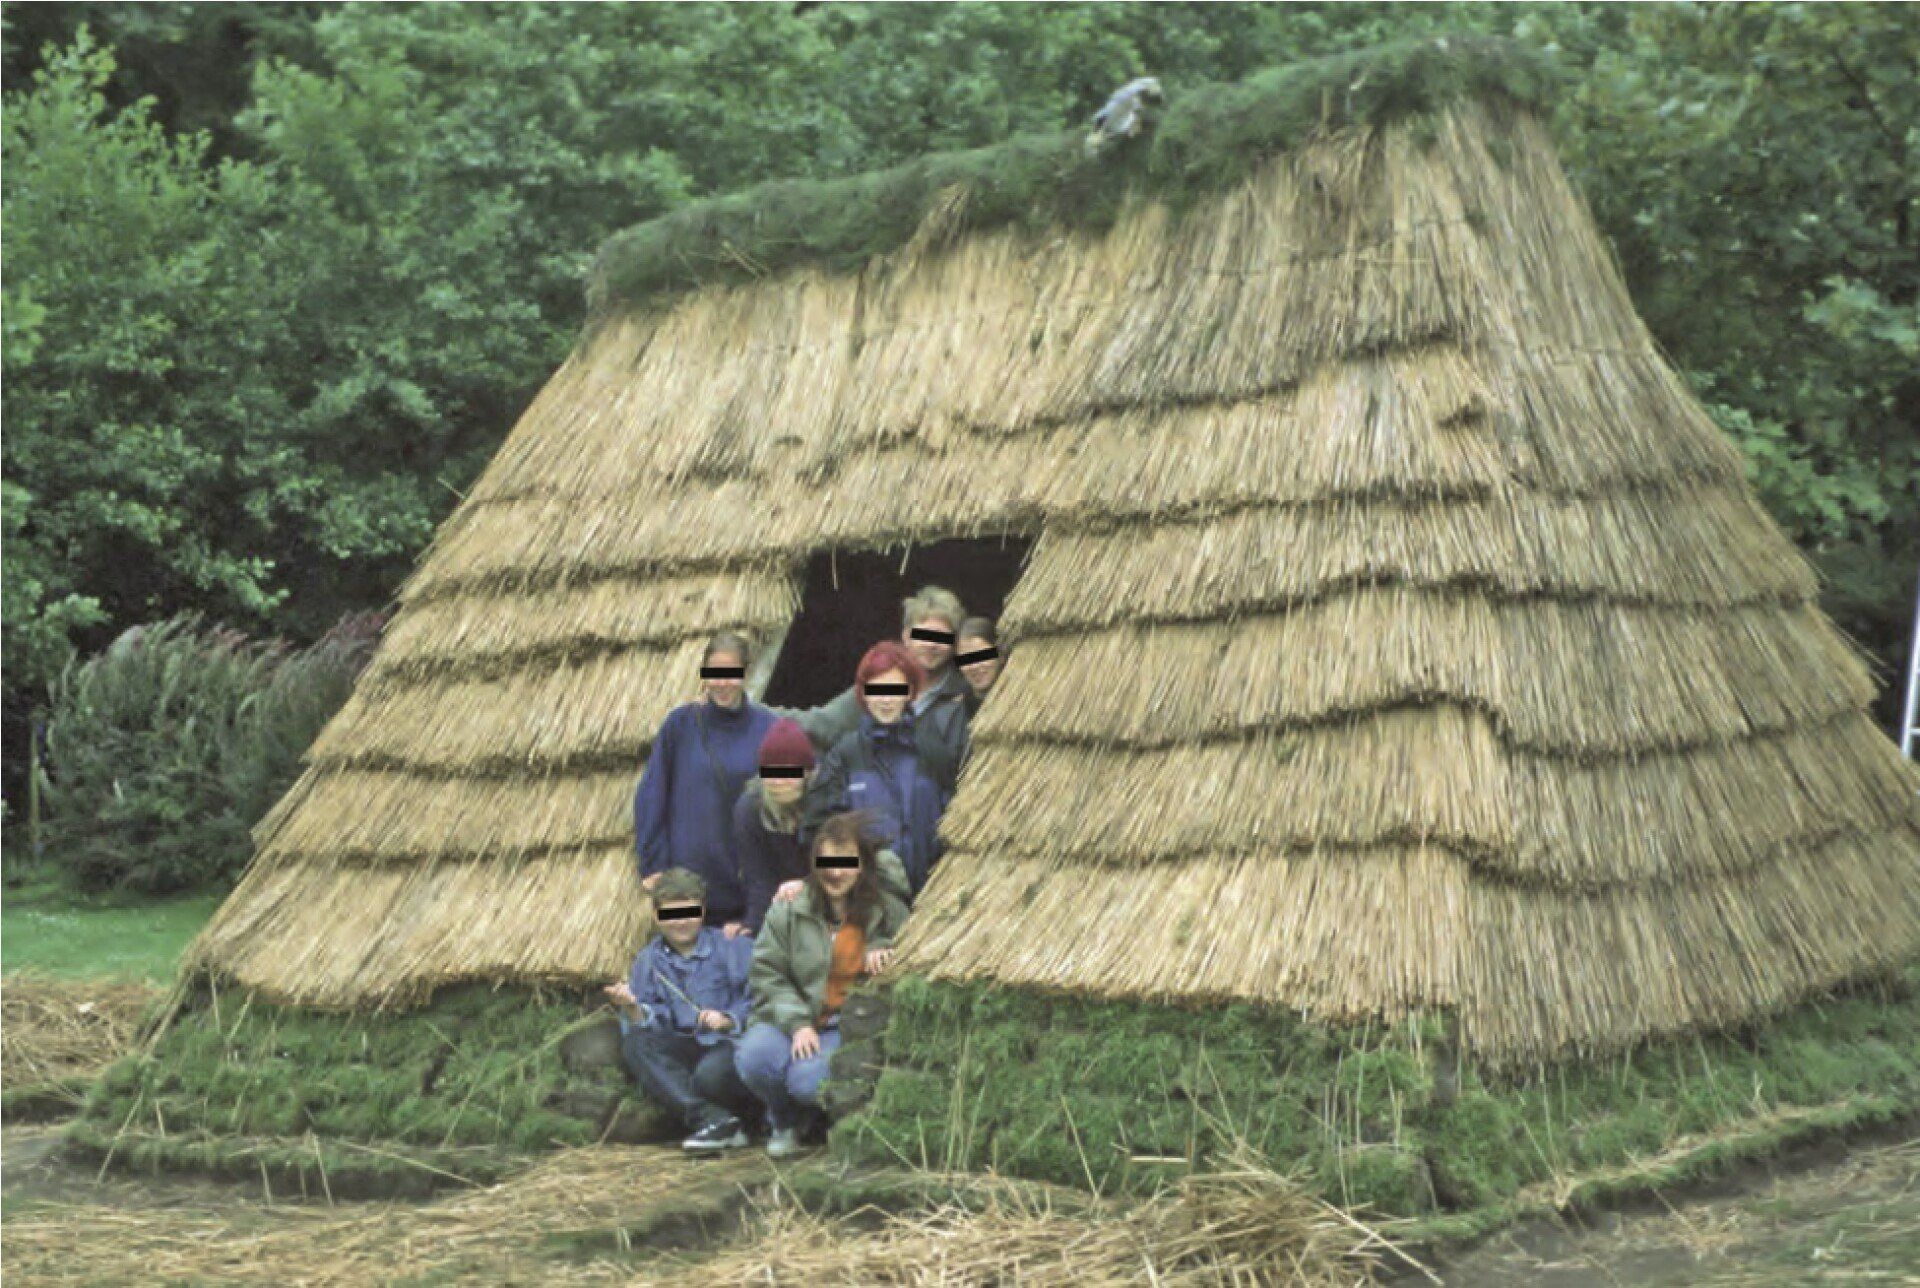 Abb. 3: Rekonstruktion der Hütte im Rahmen des Expo-Projektes am NIGE 2000 (Foto: A. Heinze).